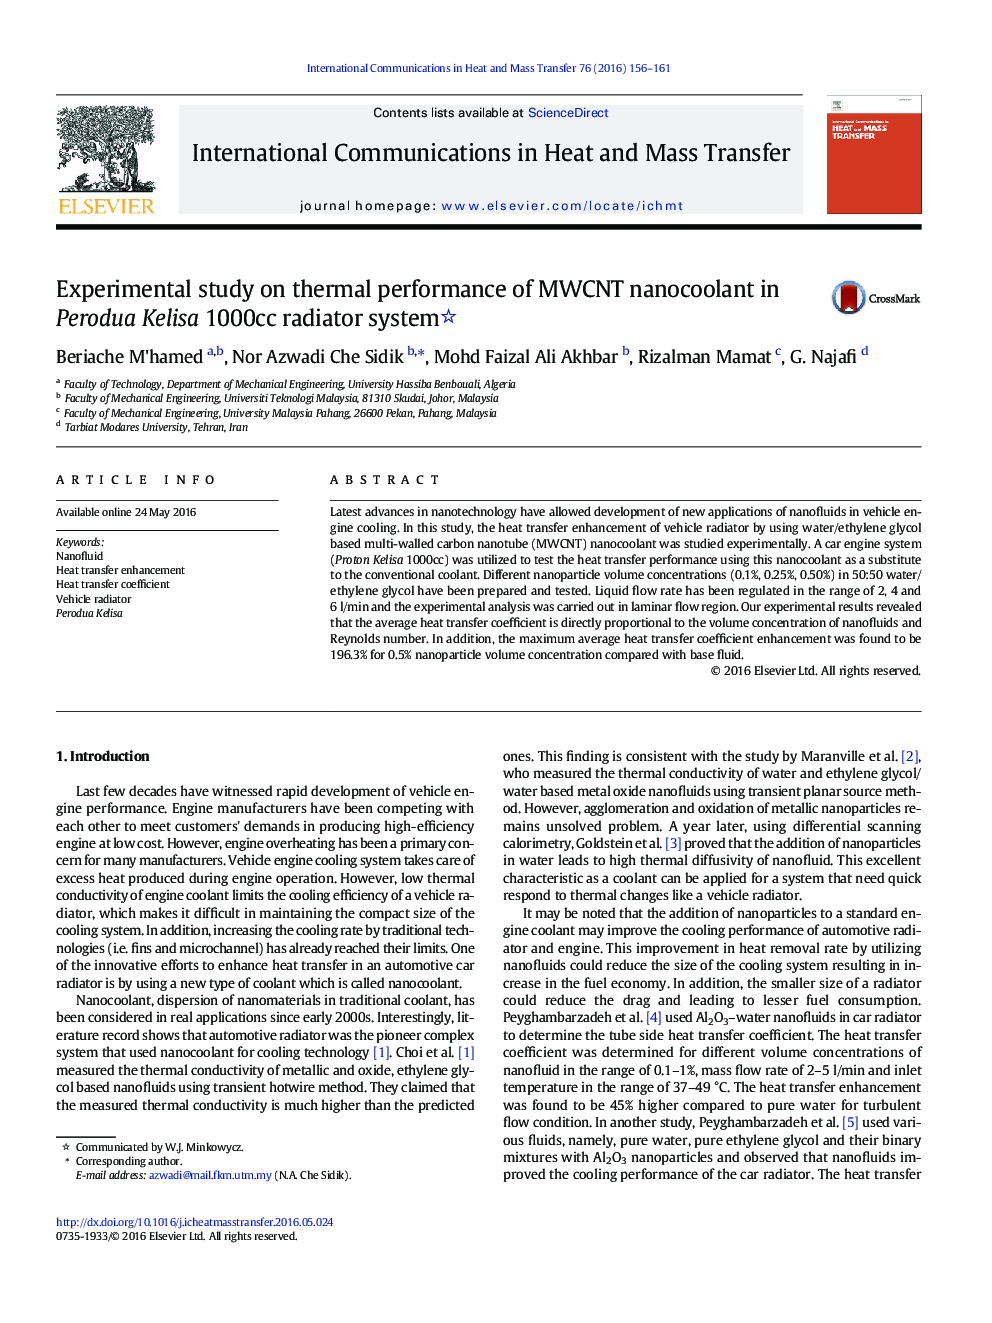 Experimental study on thermal performance of MWCNT nanocoolant in Perodua Kelisa 1000cc radiator system 